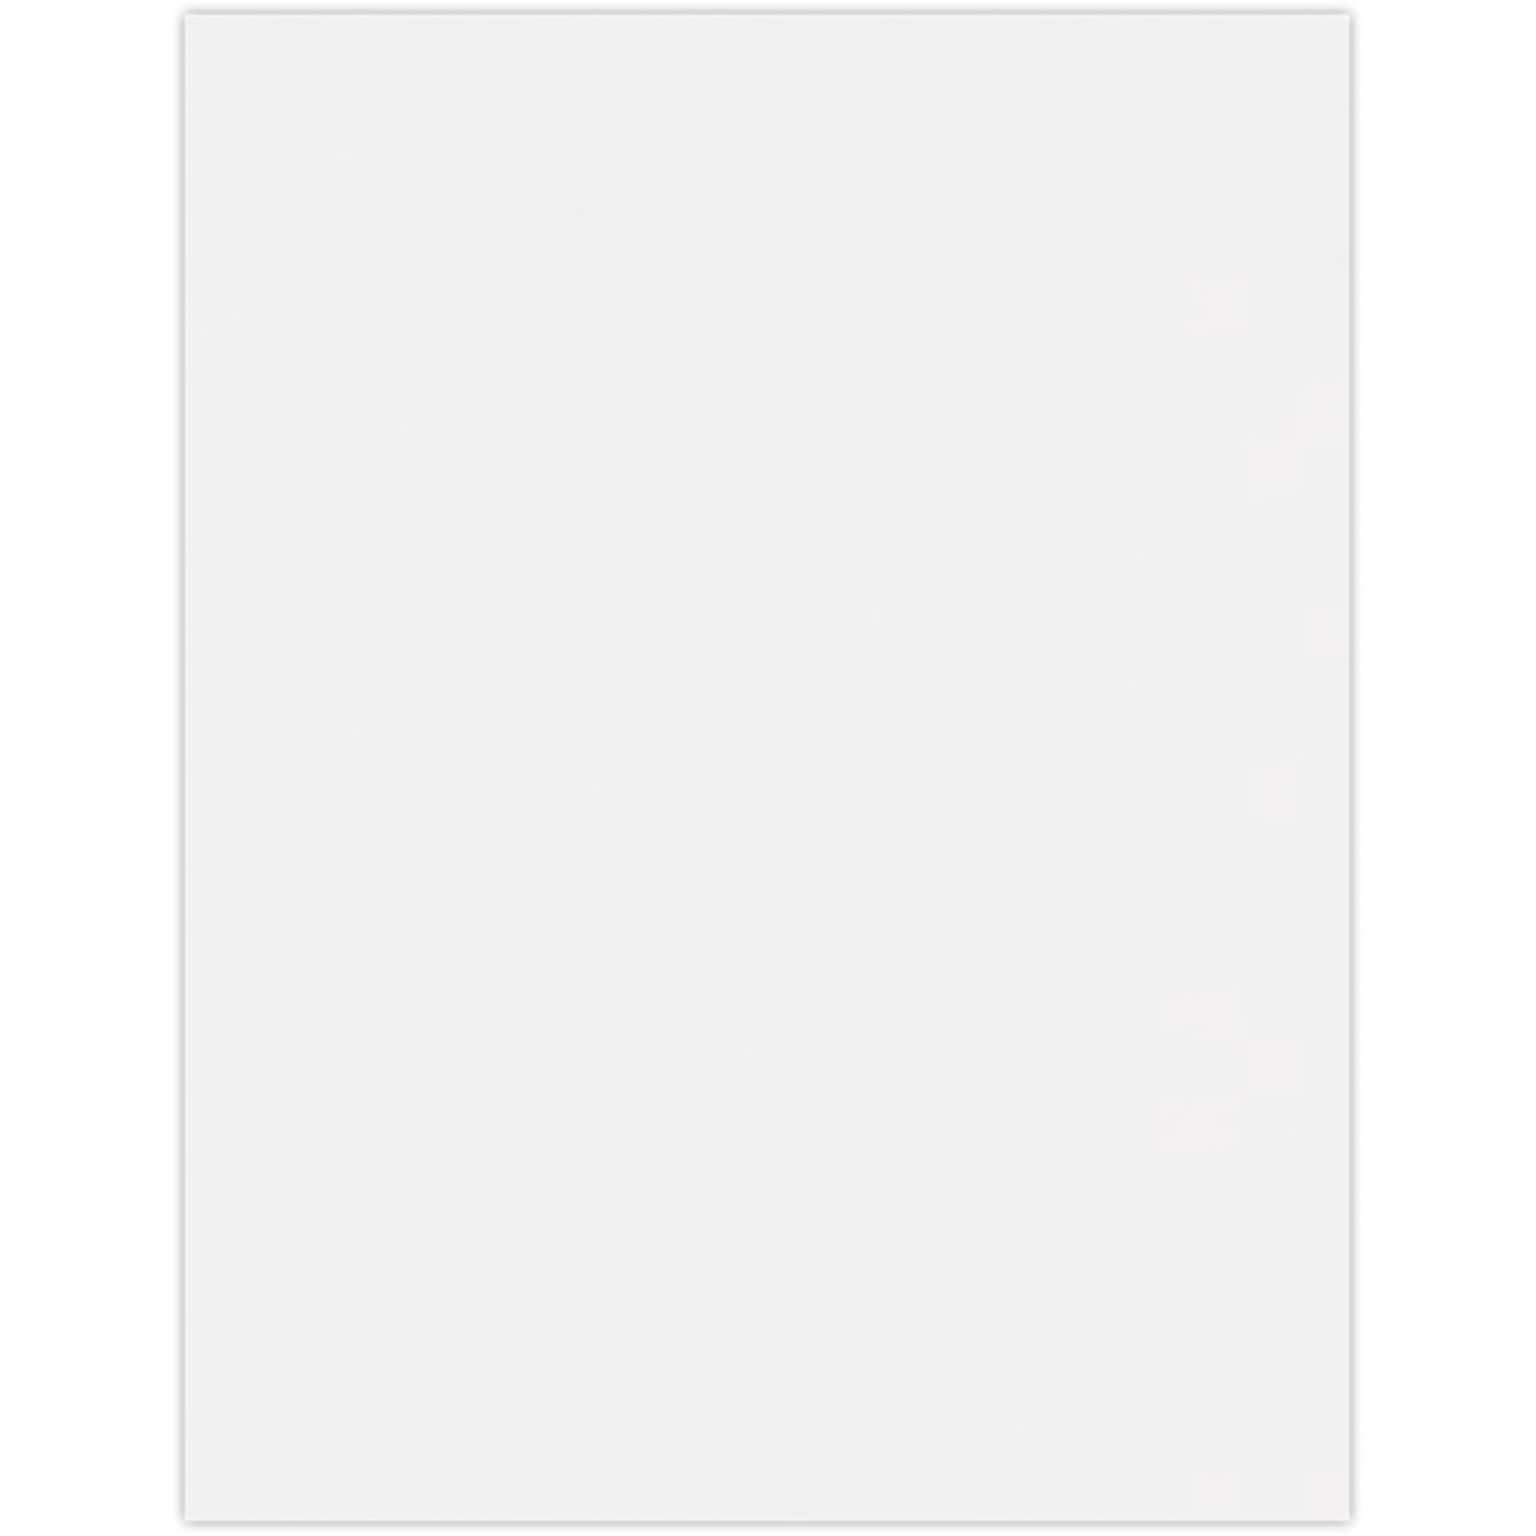 JAM PAPER 8.5 x 11 Cardstock, 100lb, White, 50/pack  (81211-C-100W-50)